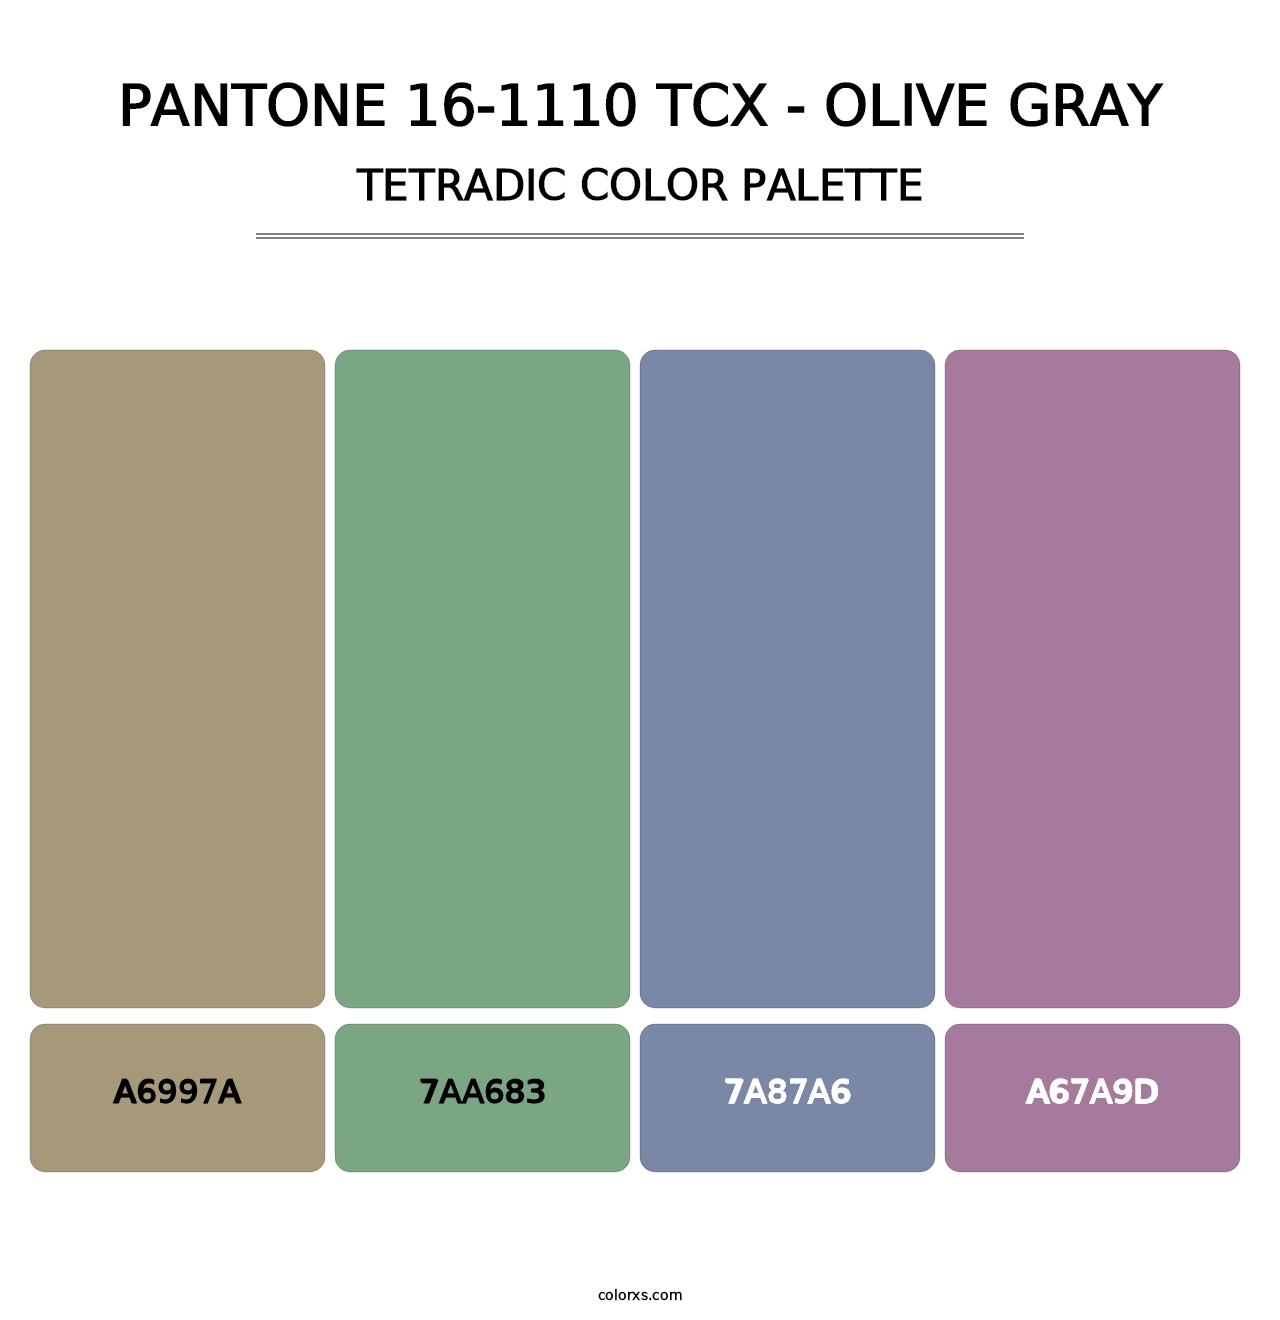 PANTONE 16-1110 TCX - Olive Gray - Tetradic Color Palette